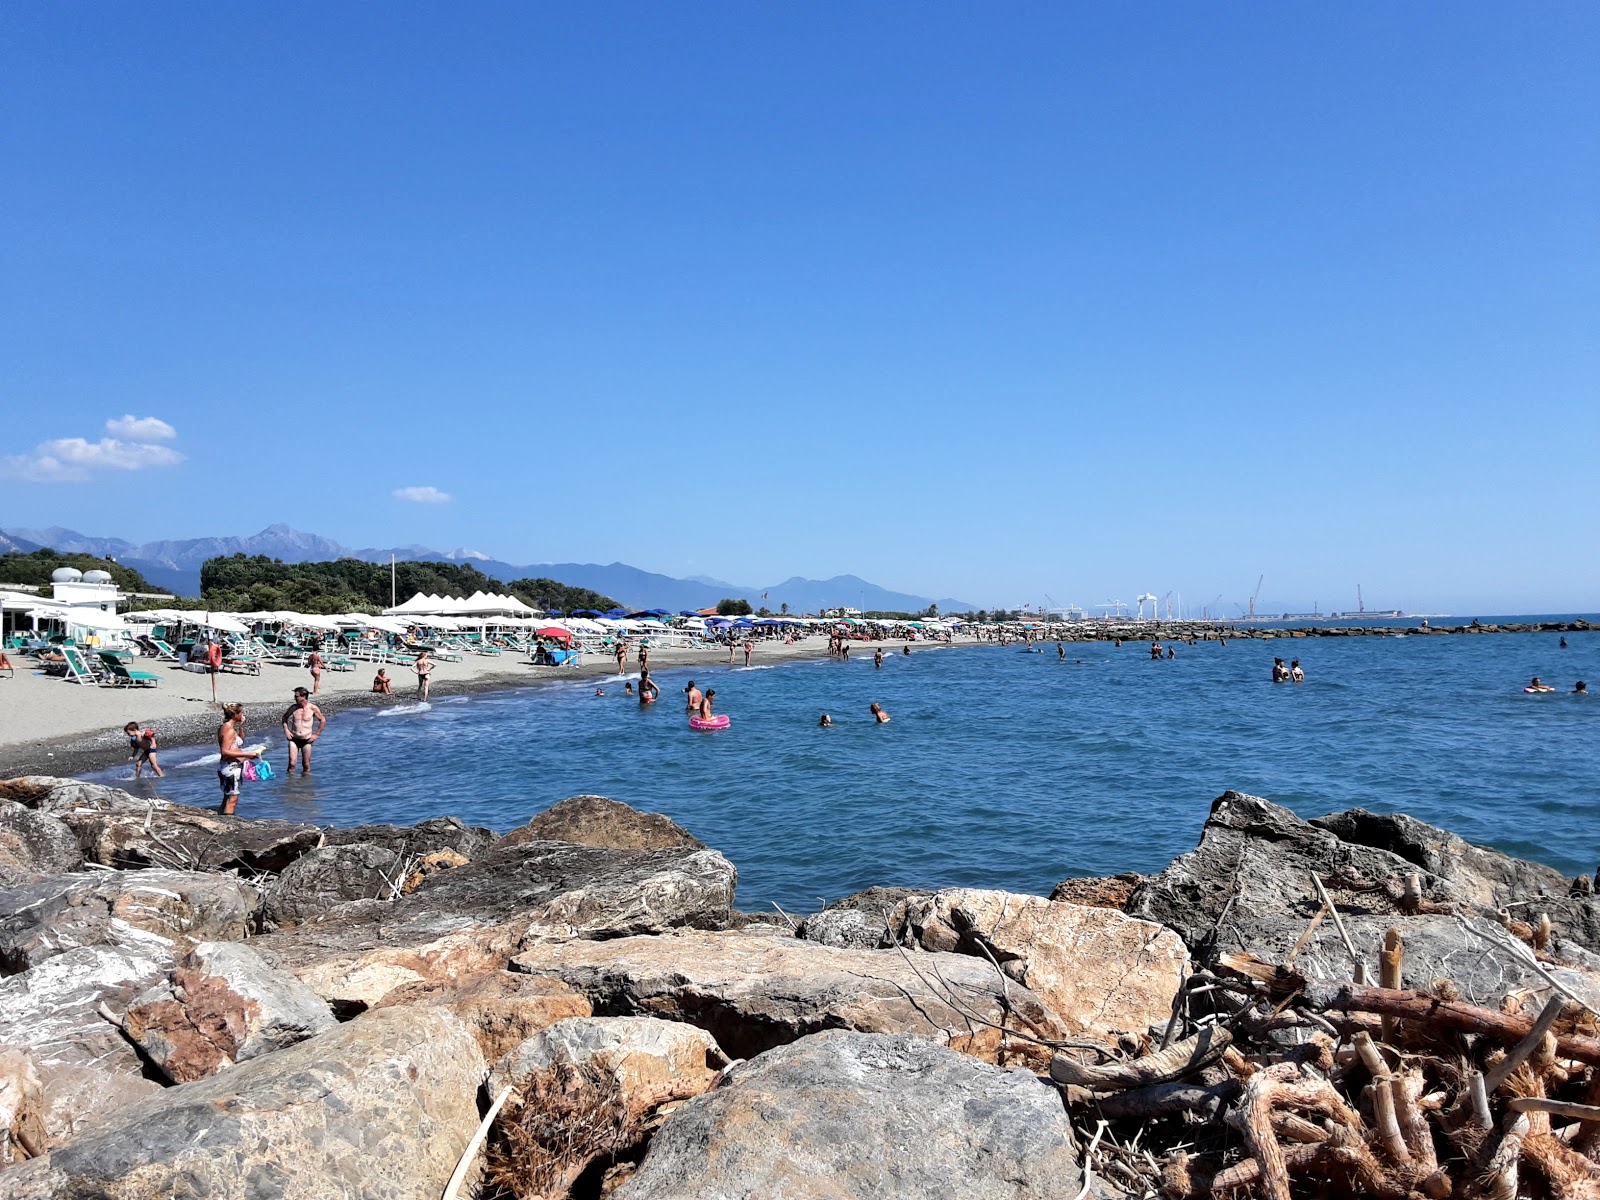 Fotografija Spiaggia di Marinella di Sarzana z prostorna obala